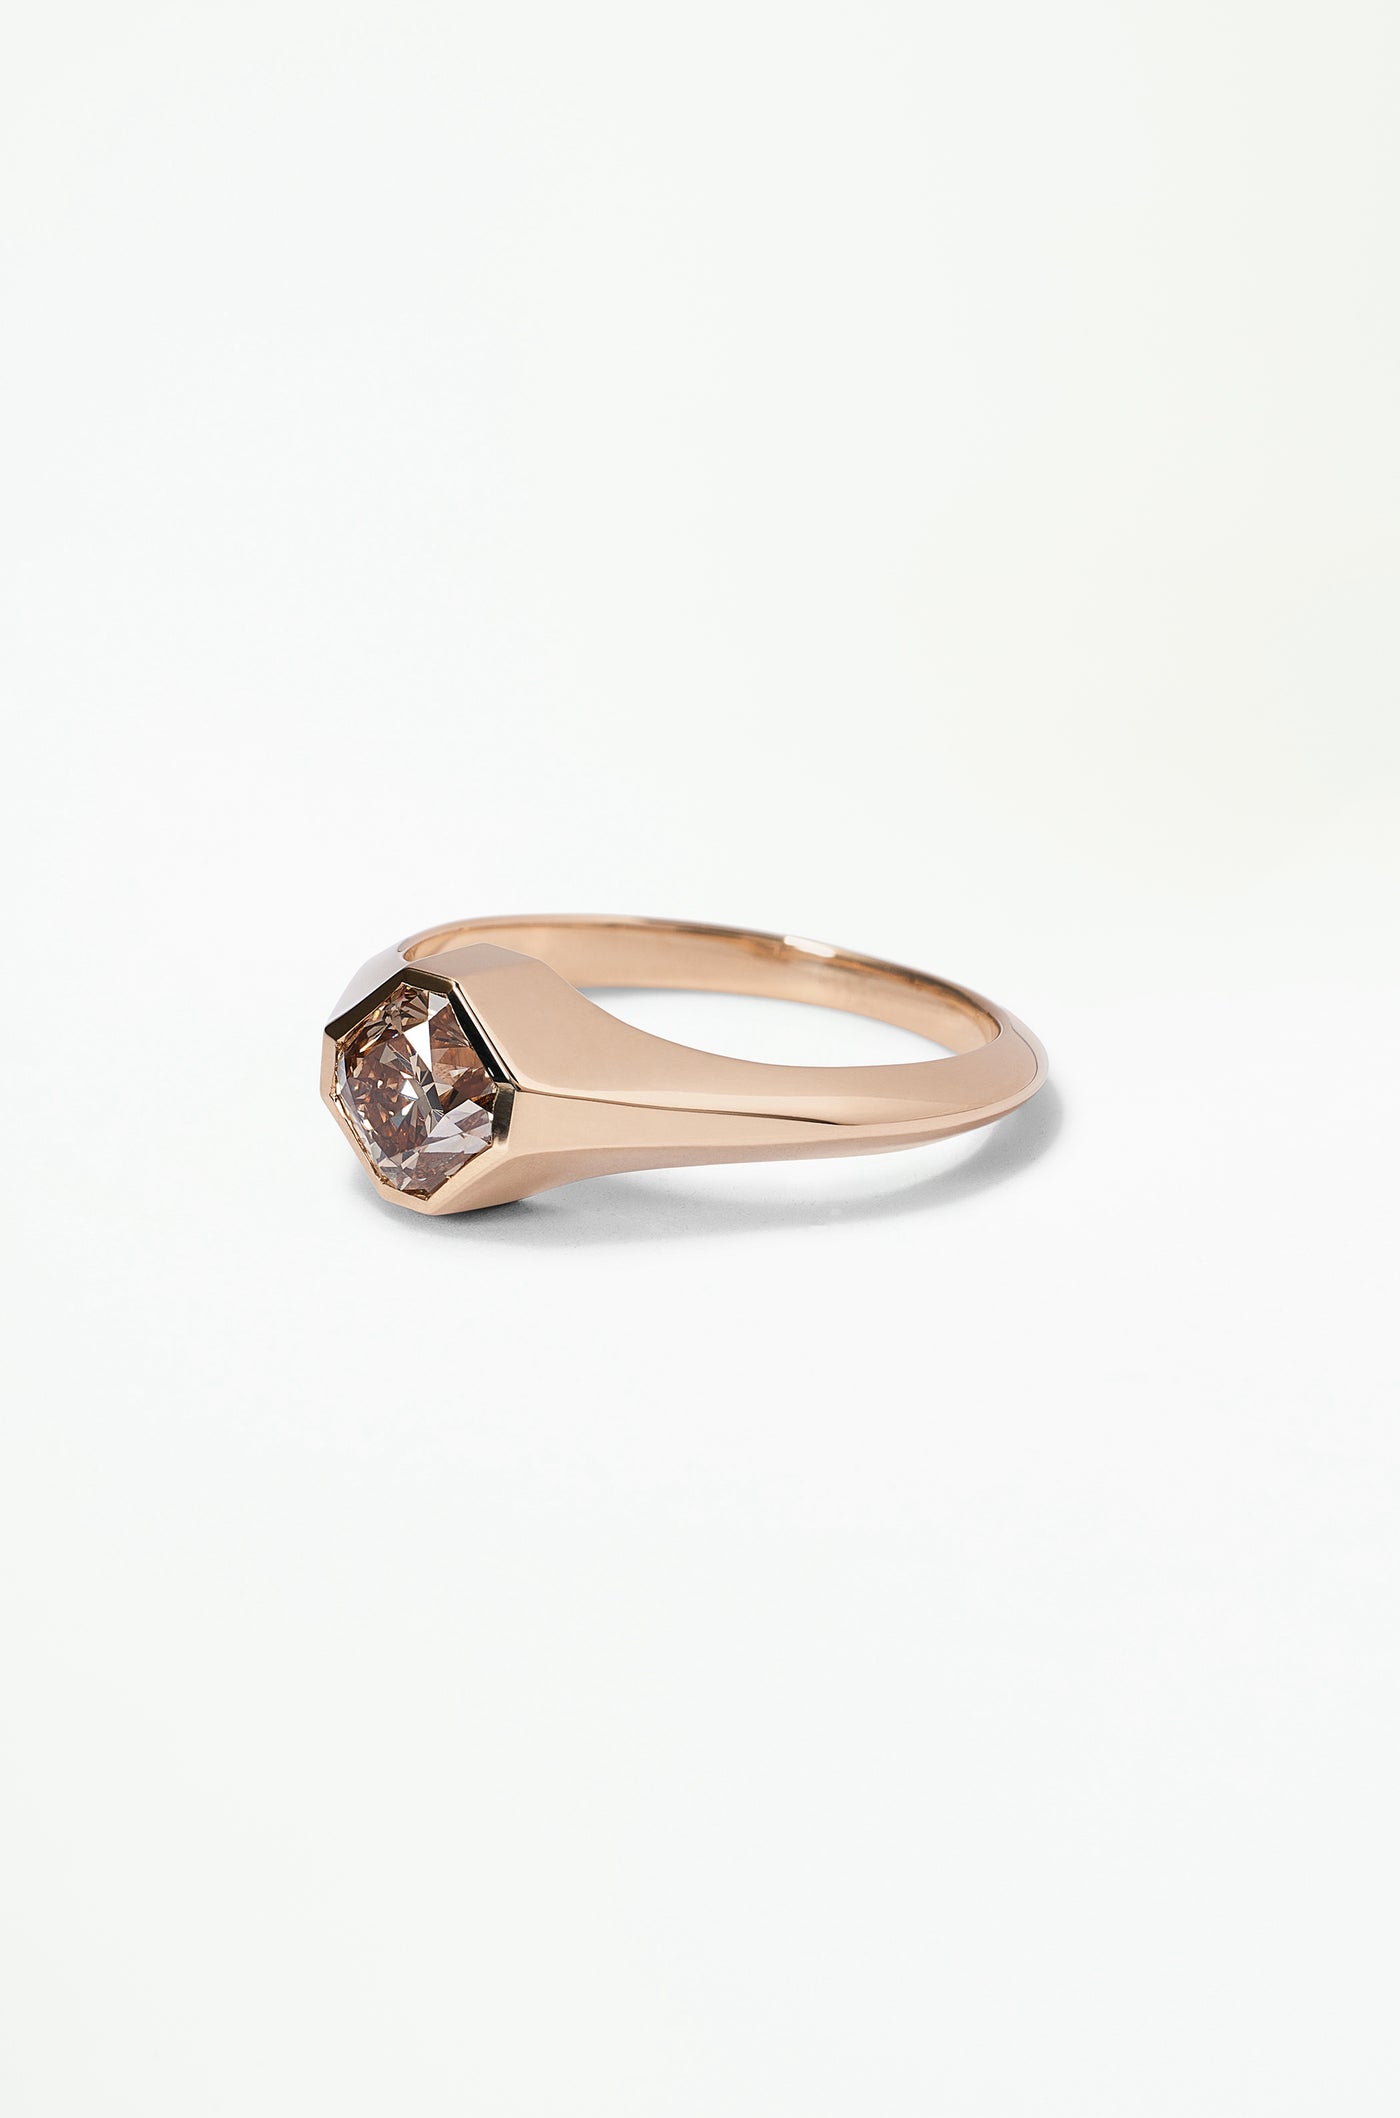 One of a Kind Fancy Cut Diamond Signet Ring No. 44